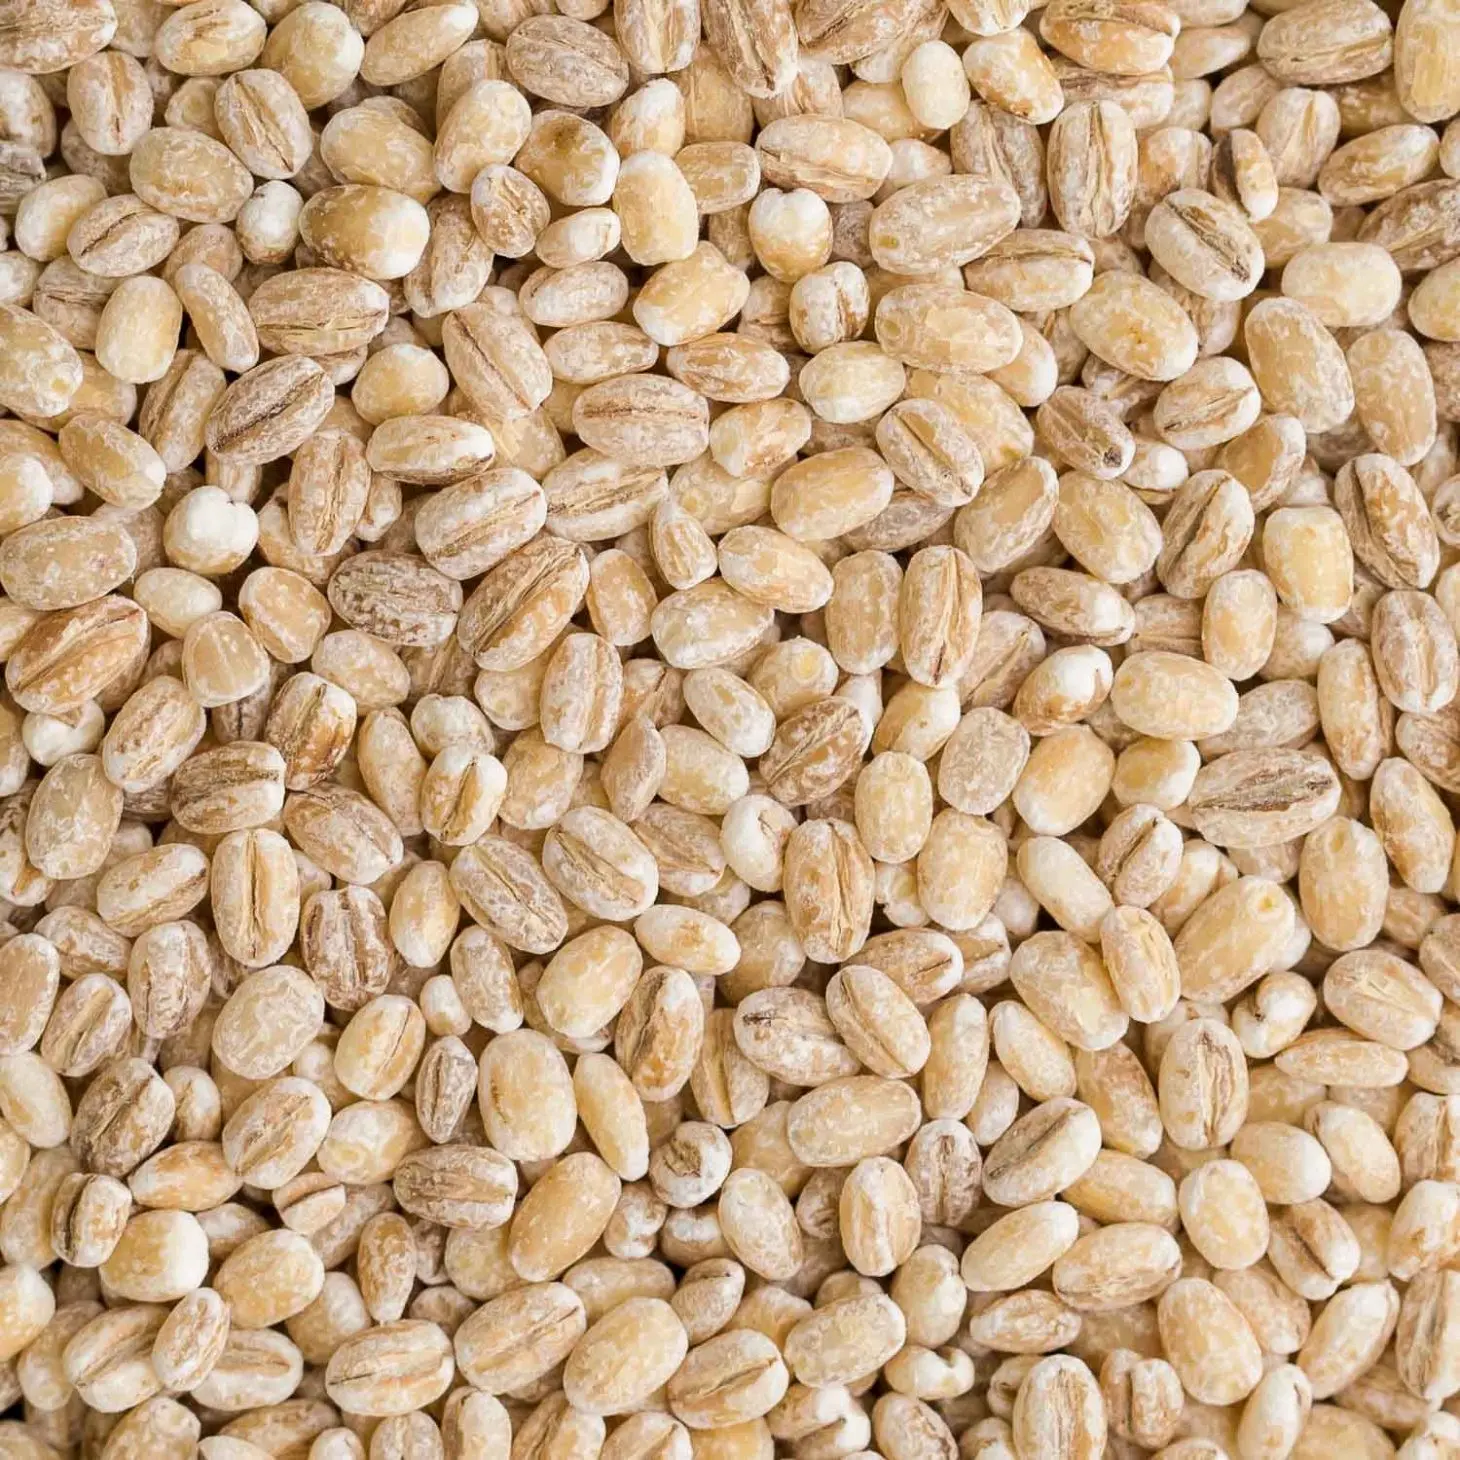 Barley | Sumber Foto: naturallyella.com